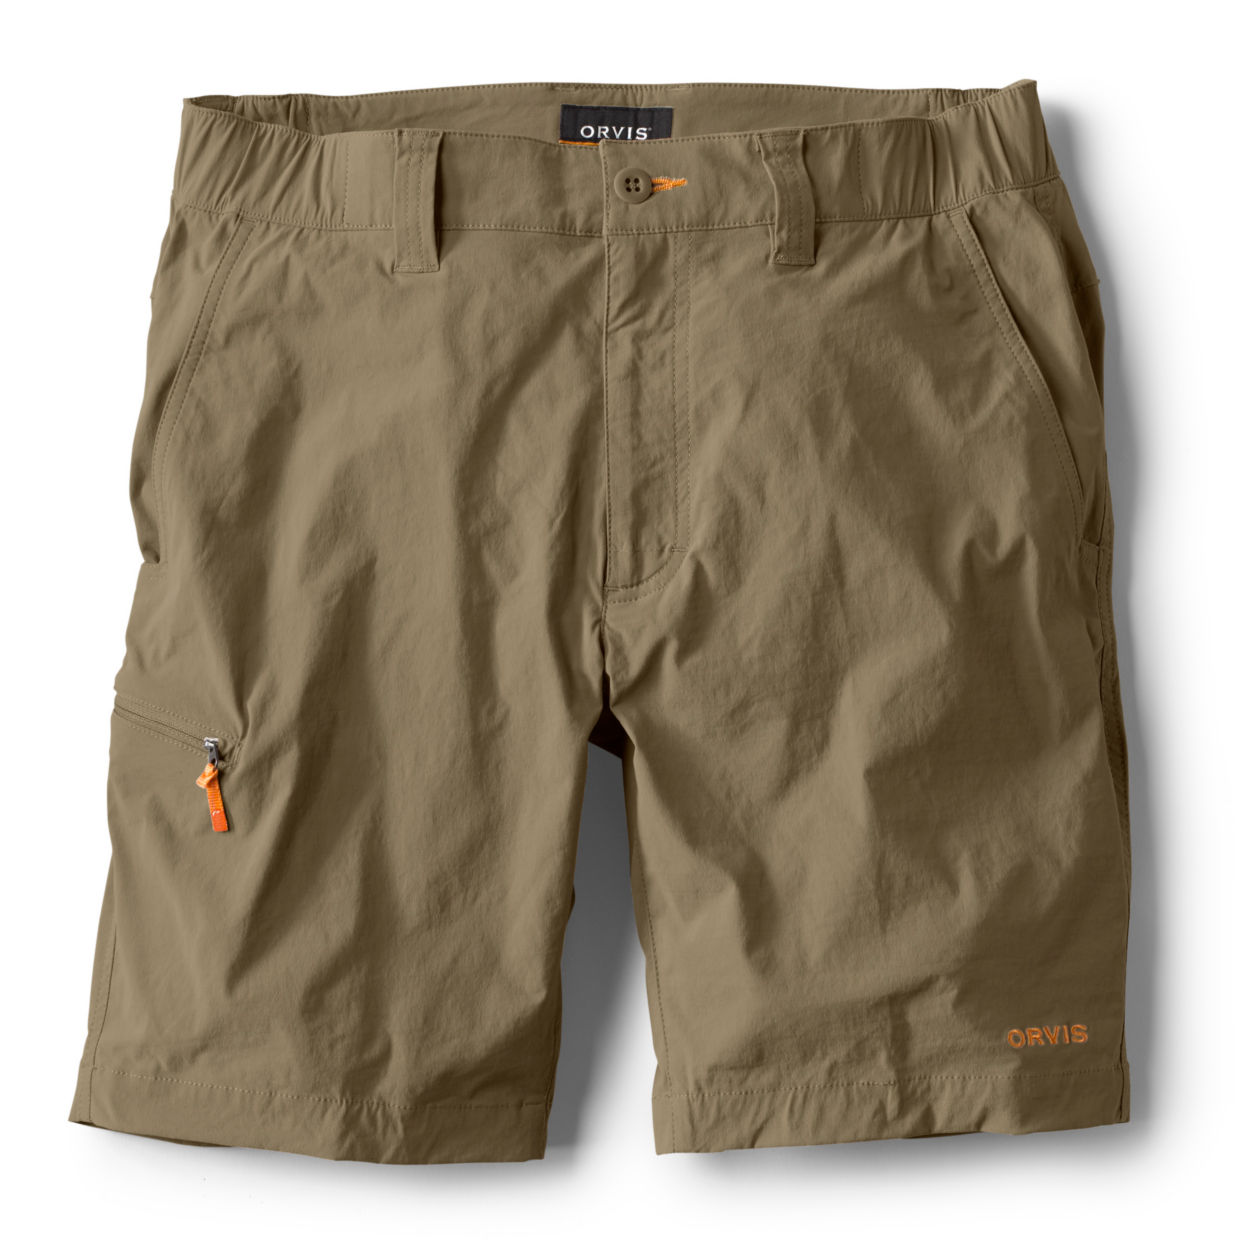 Jackson Quick-Dry Shorts